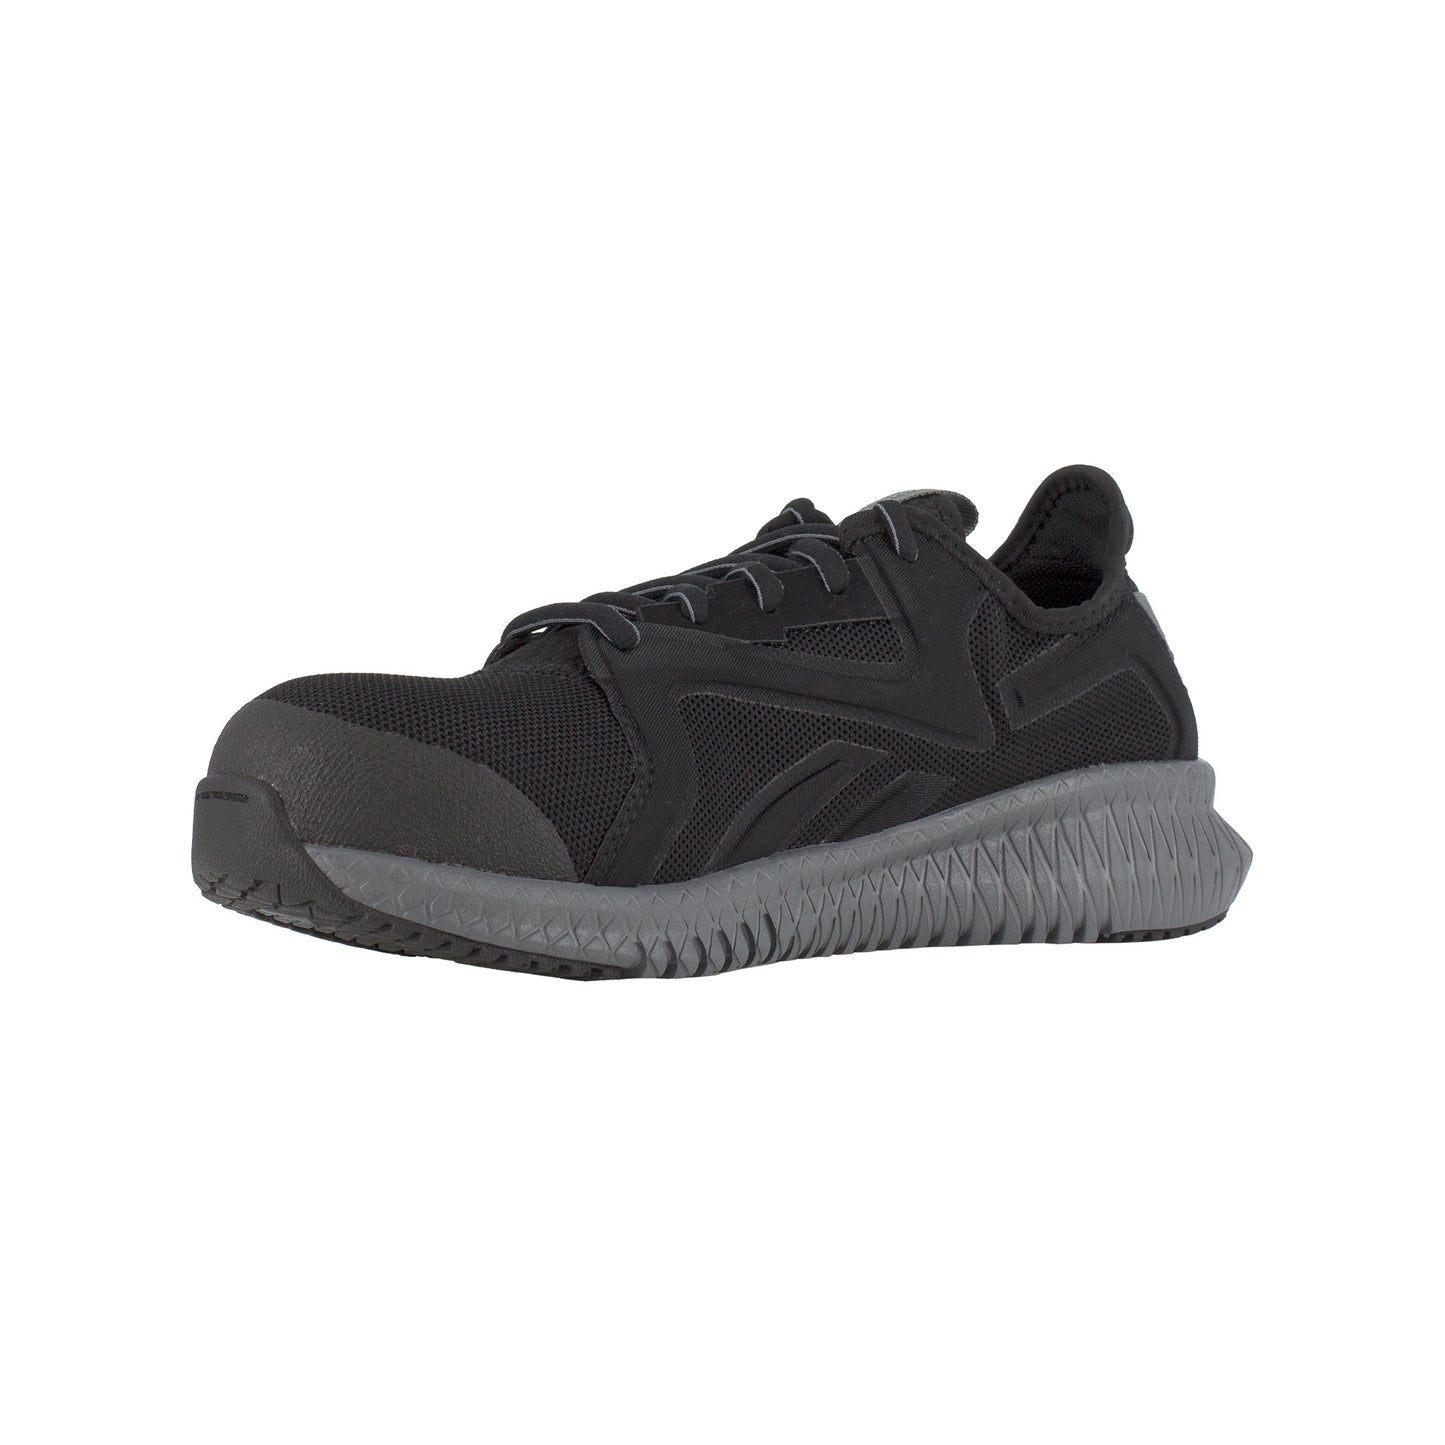 Reebok Ladies Flexagon 3.0 Composite Toe Black Athletic Work Shoes RB464